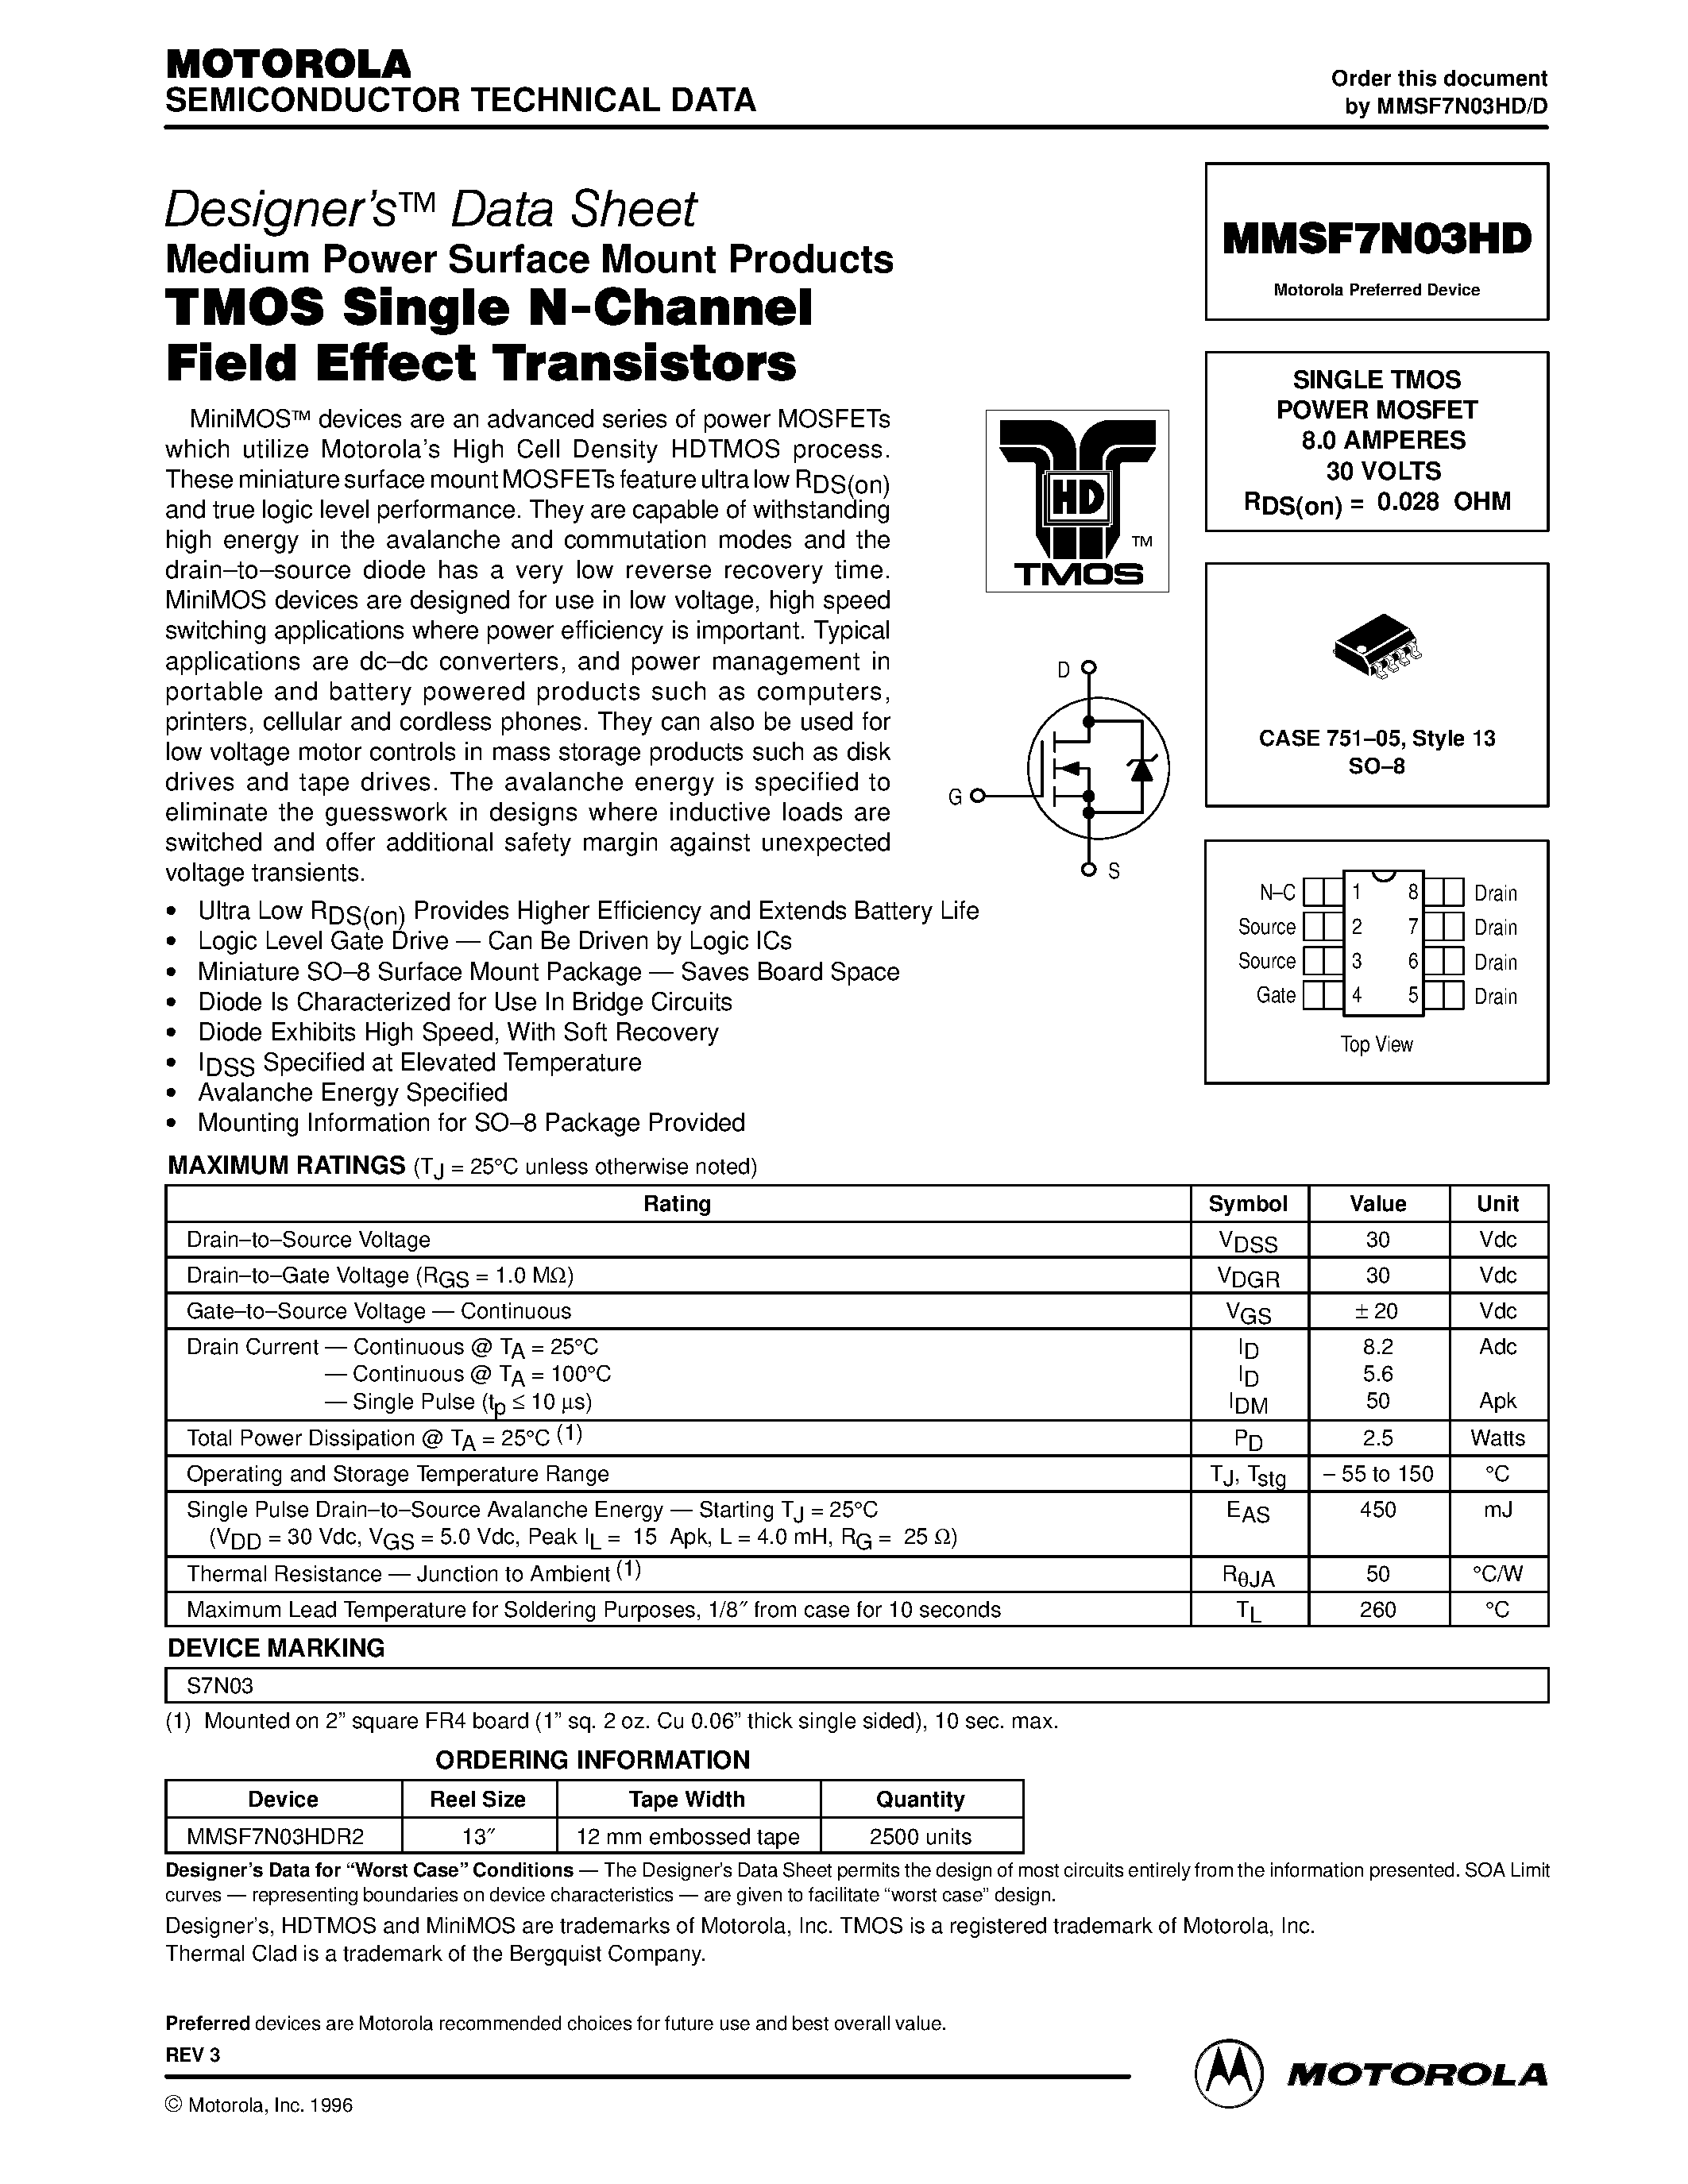 Datasheet MMSF7N03HD - SINGLE TMOS POWER MOSFET 8.0 AMPERES 30 VOLTS page 1